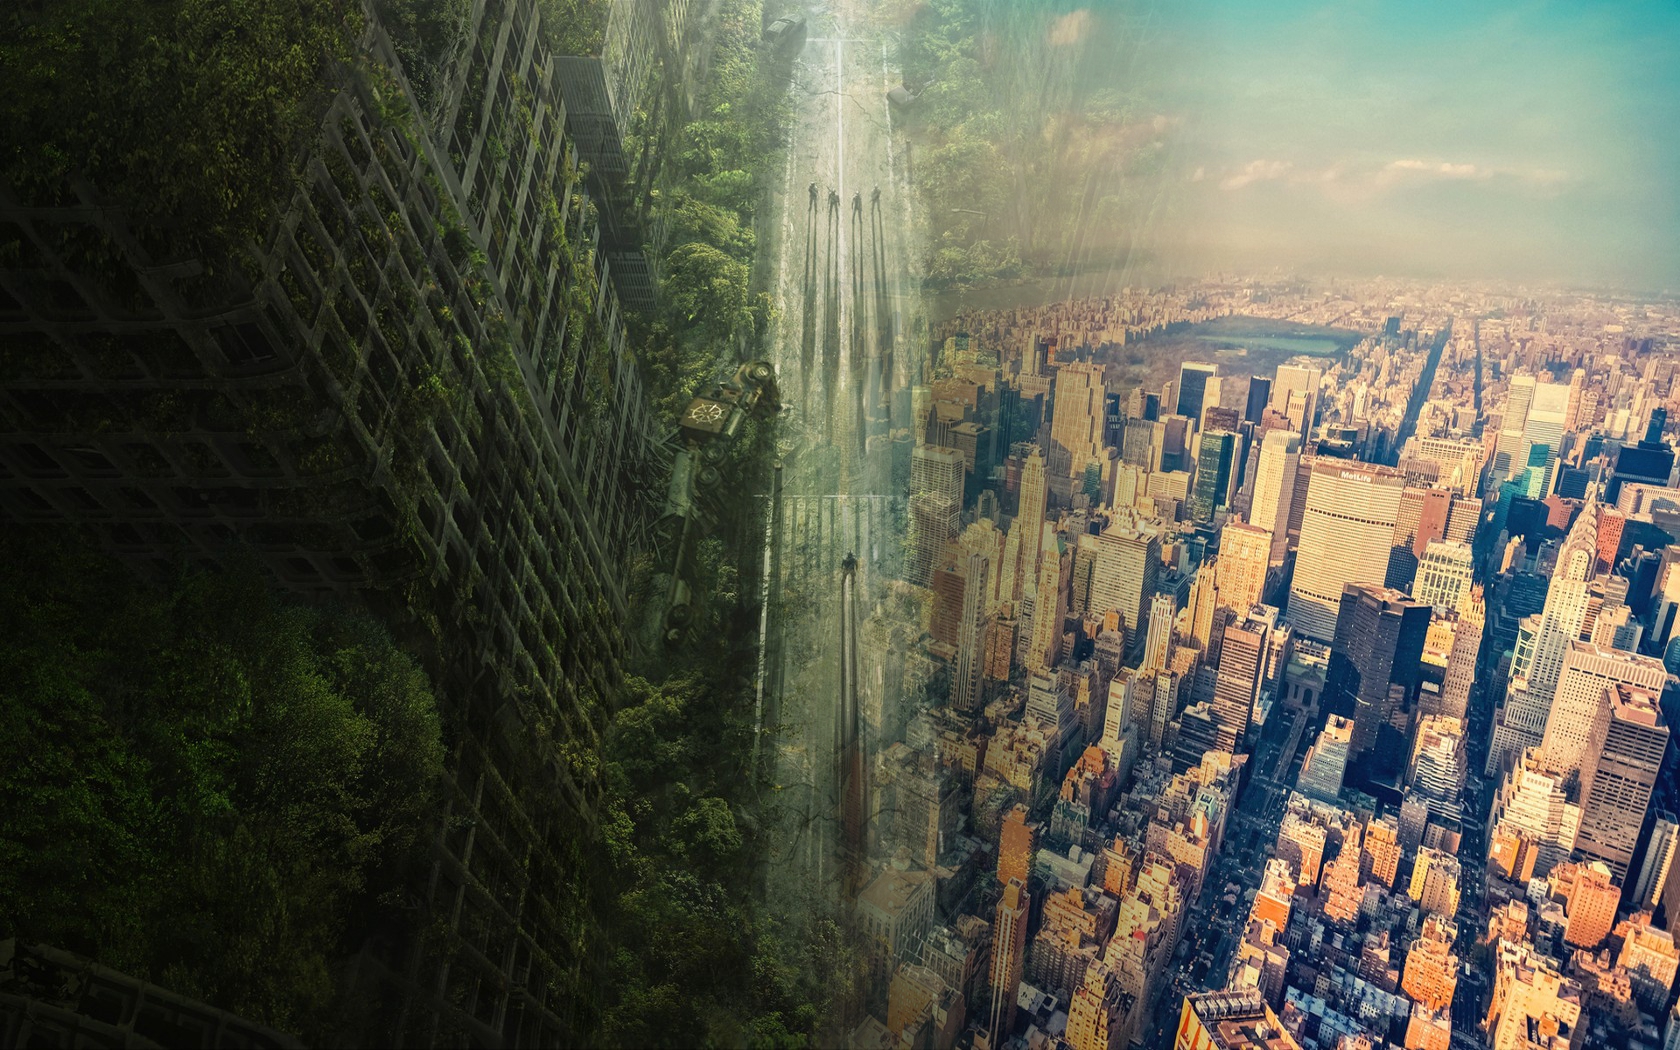 City/Forest by MeGustaDeviantart on deviantART